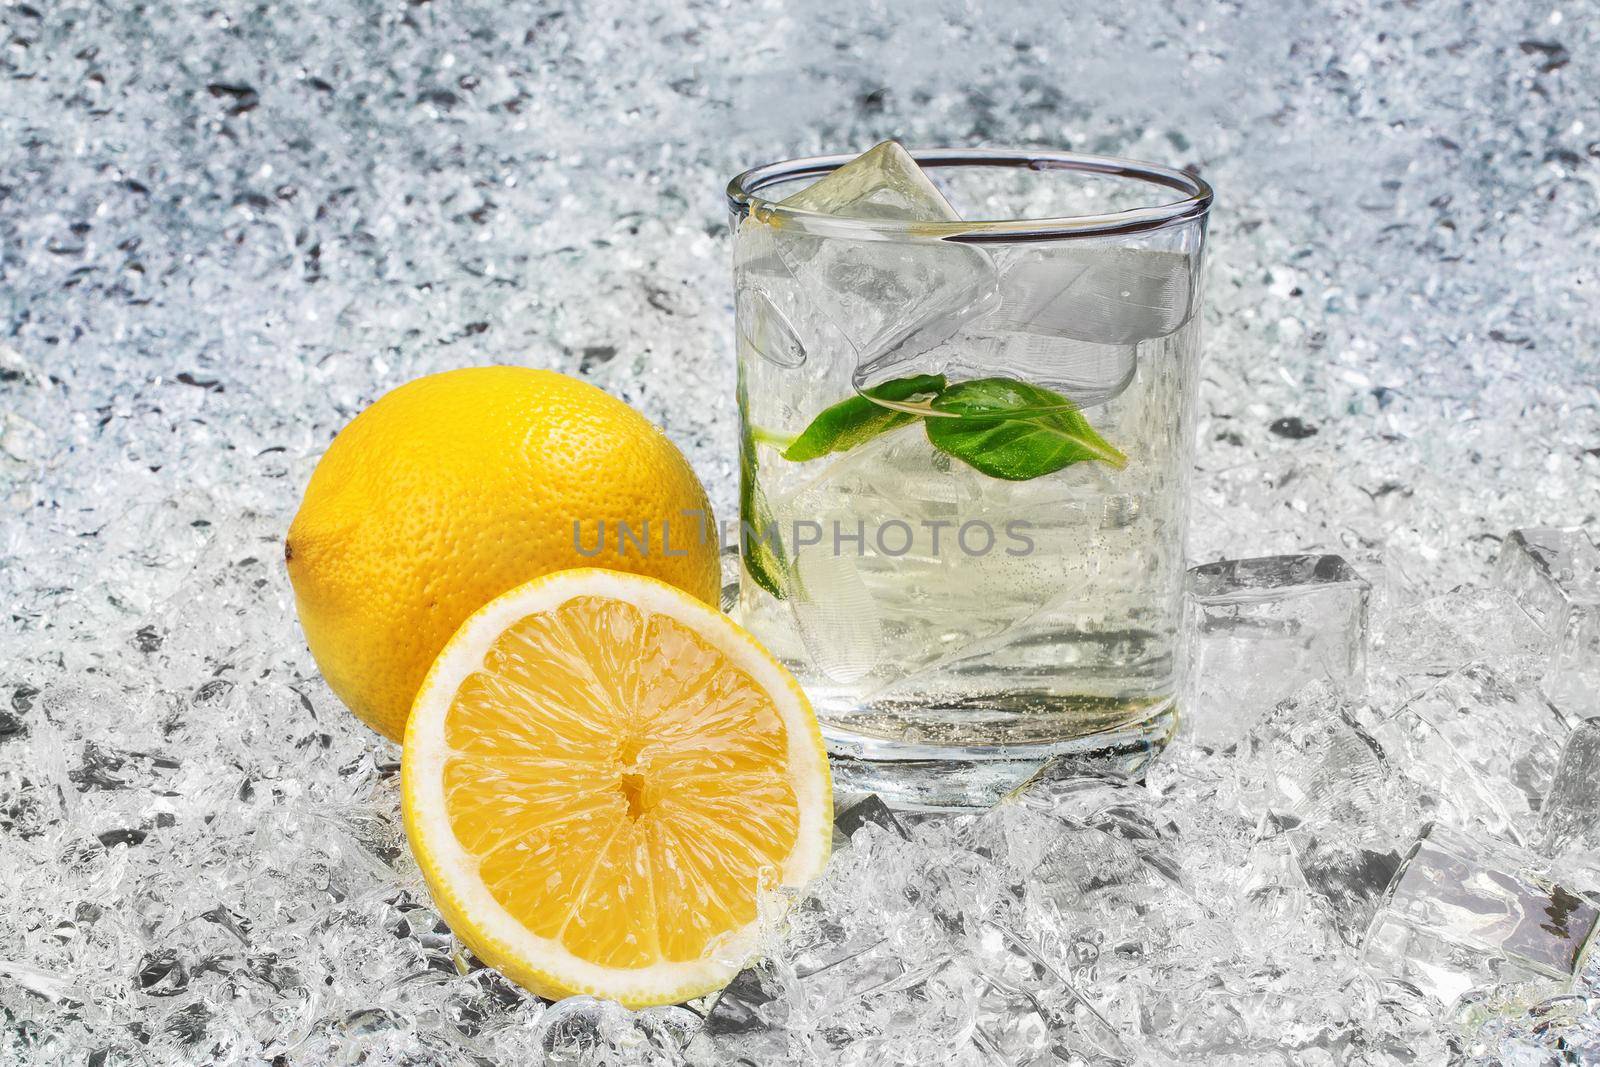 Refreshing lemonade with ice and lemon. Stock image.